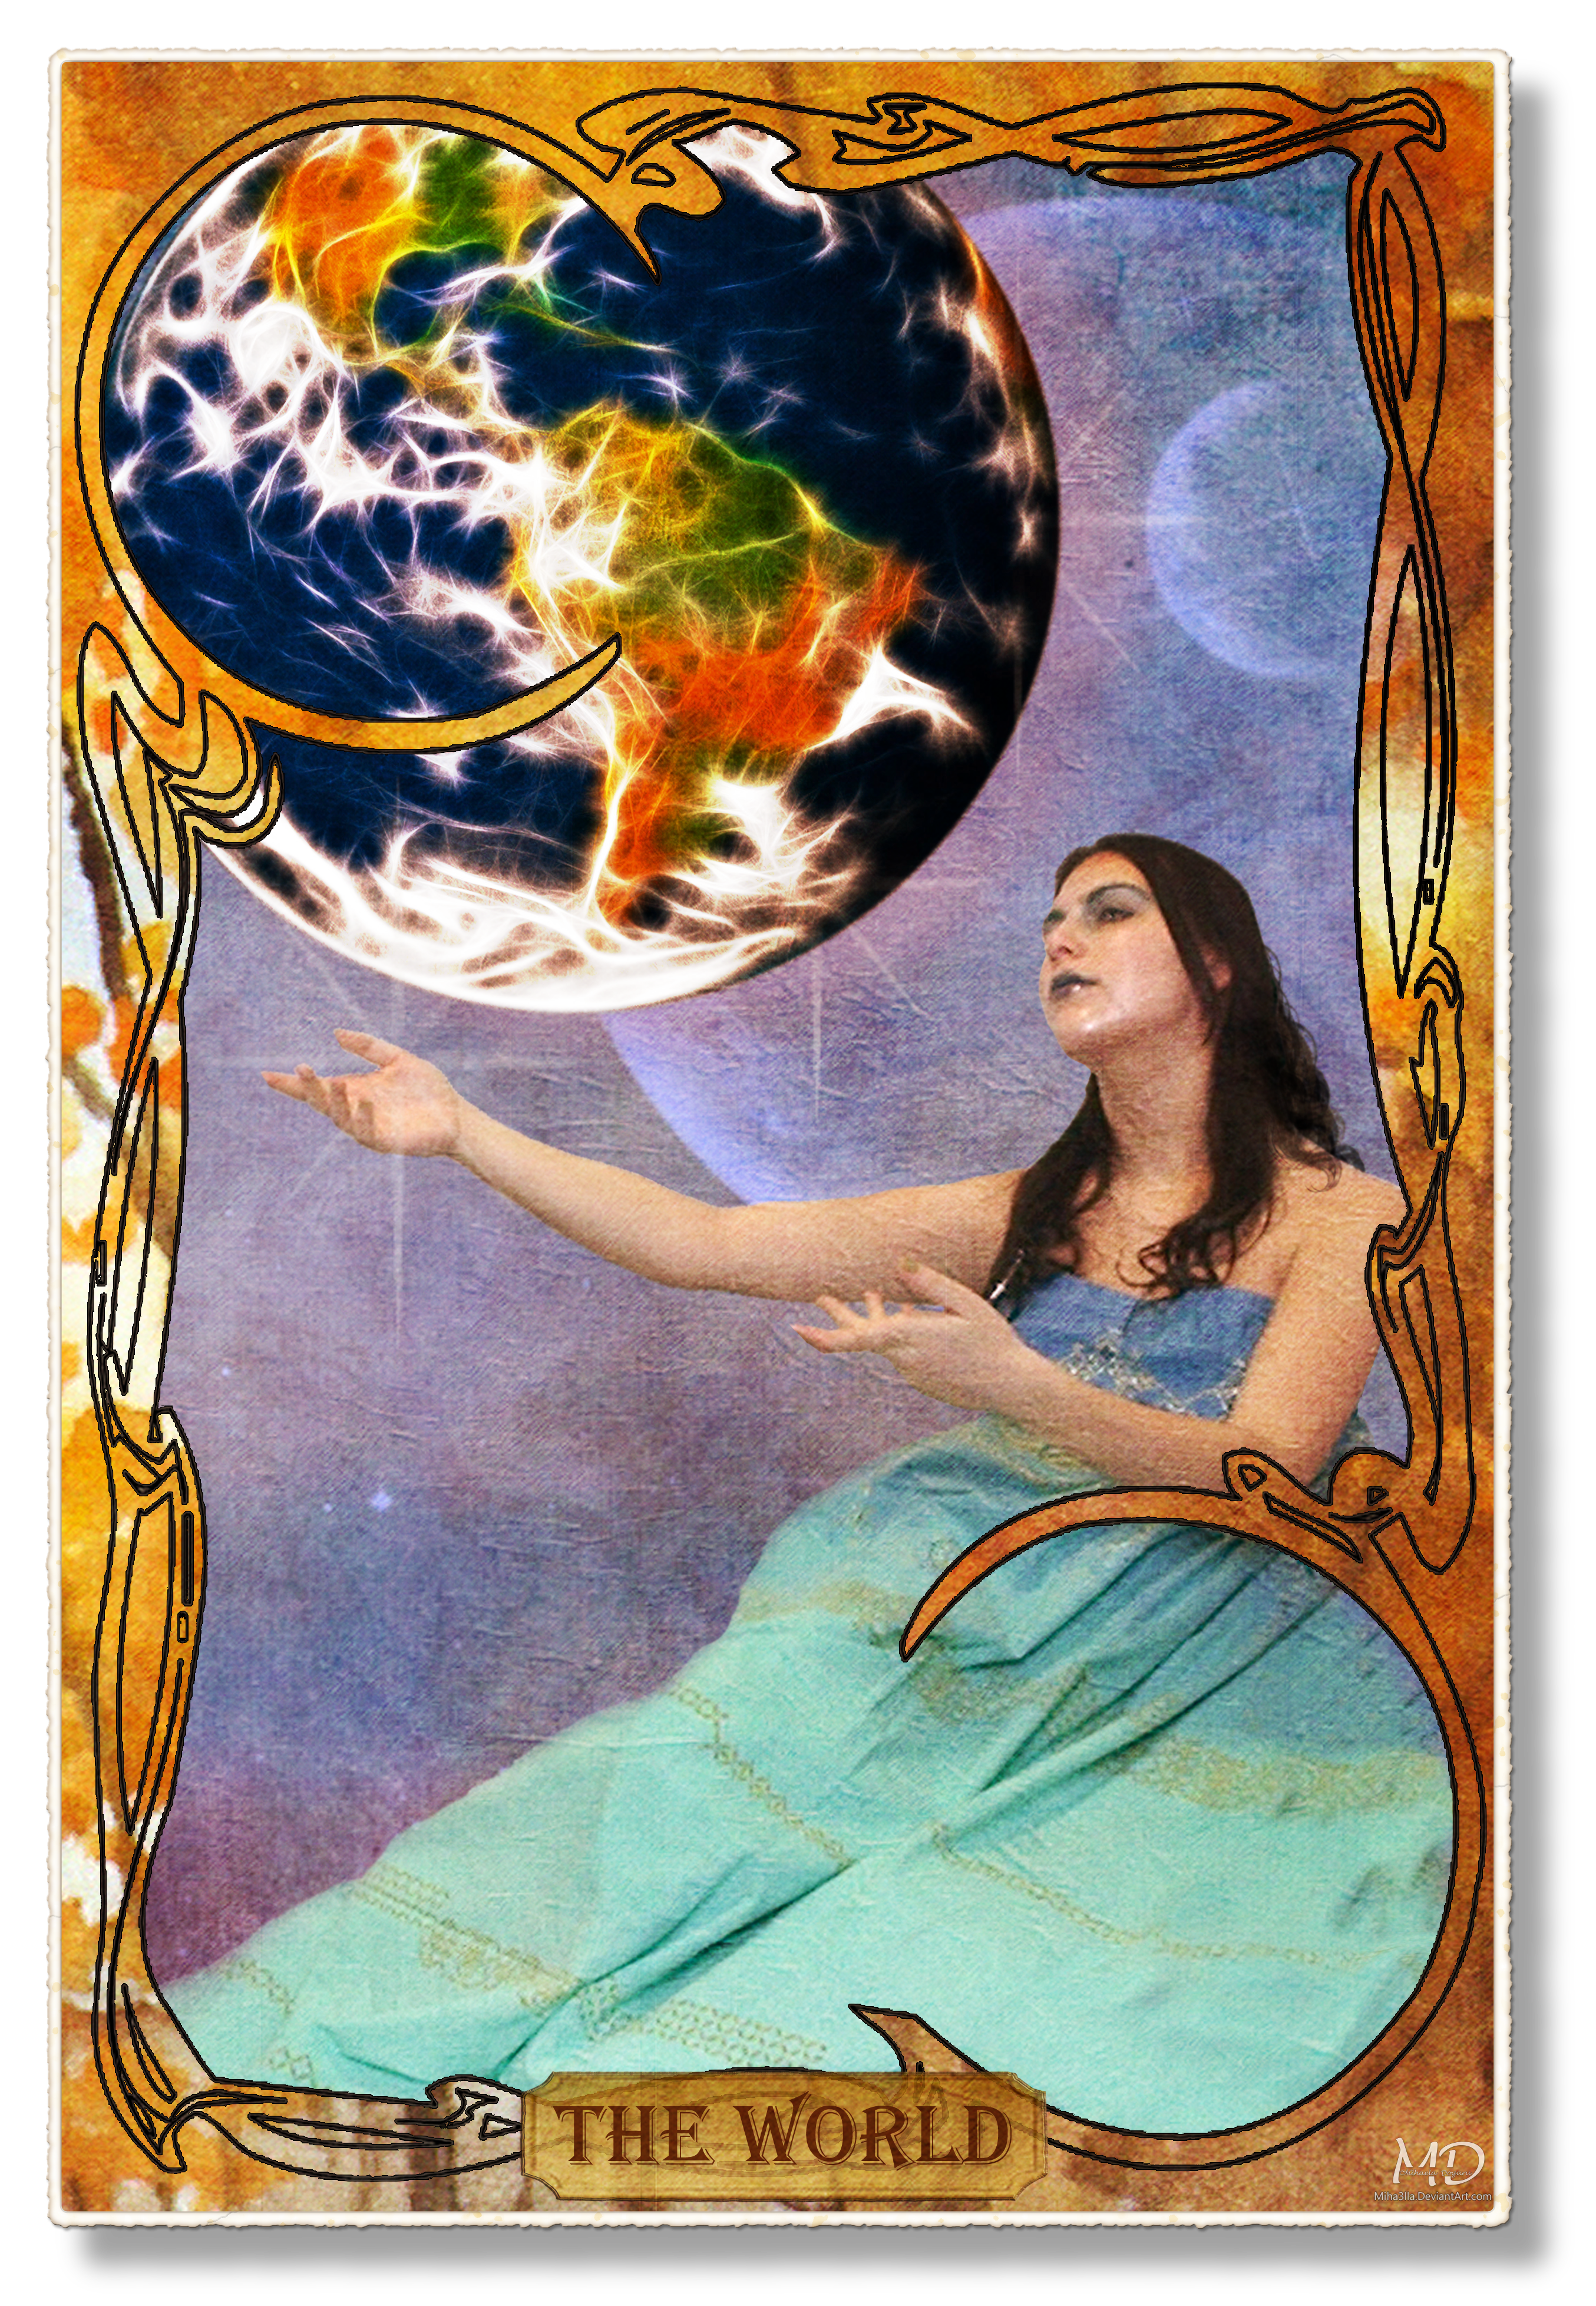 THE WORLD - Tarot card by Miha3lla on DeviantArt